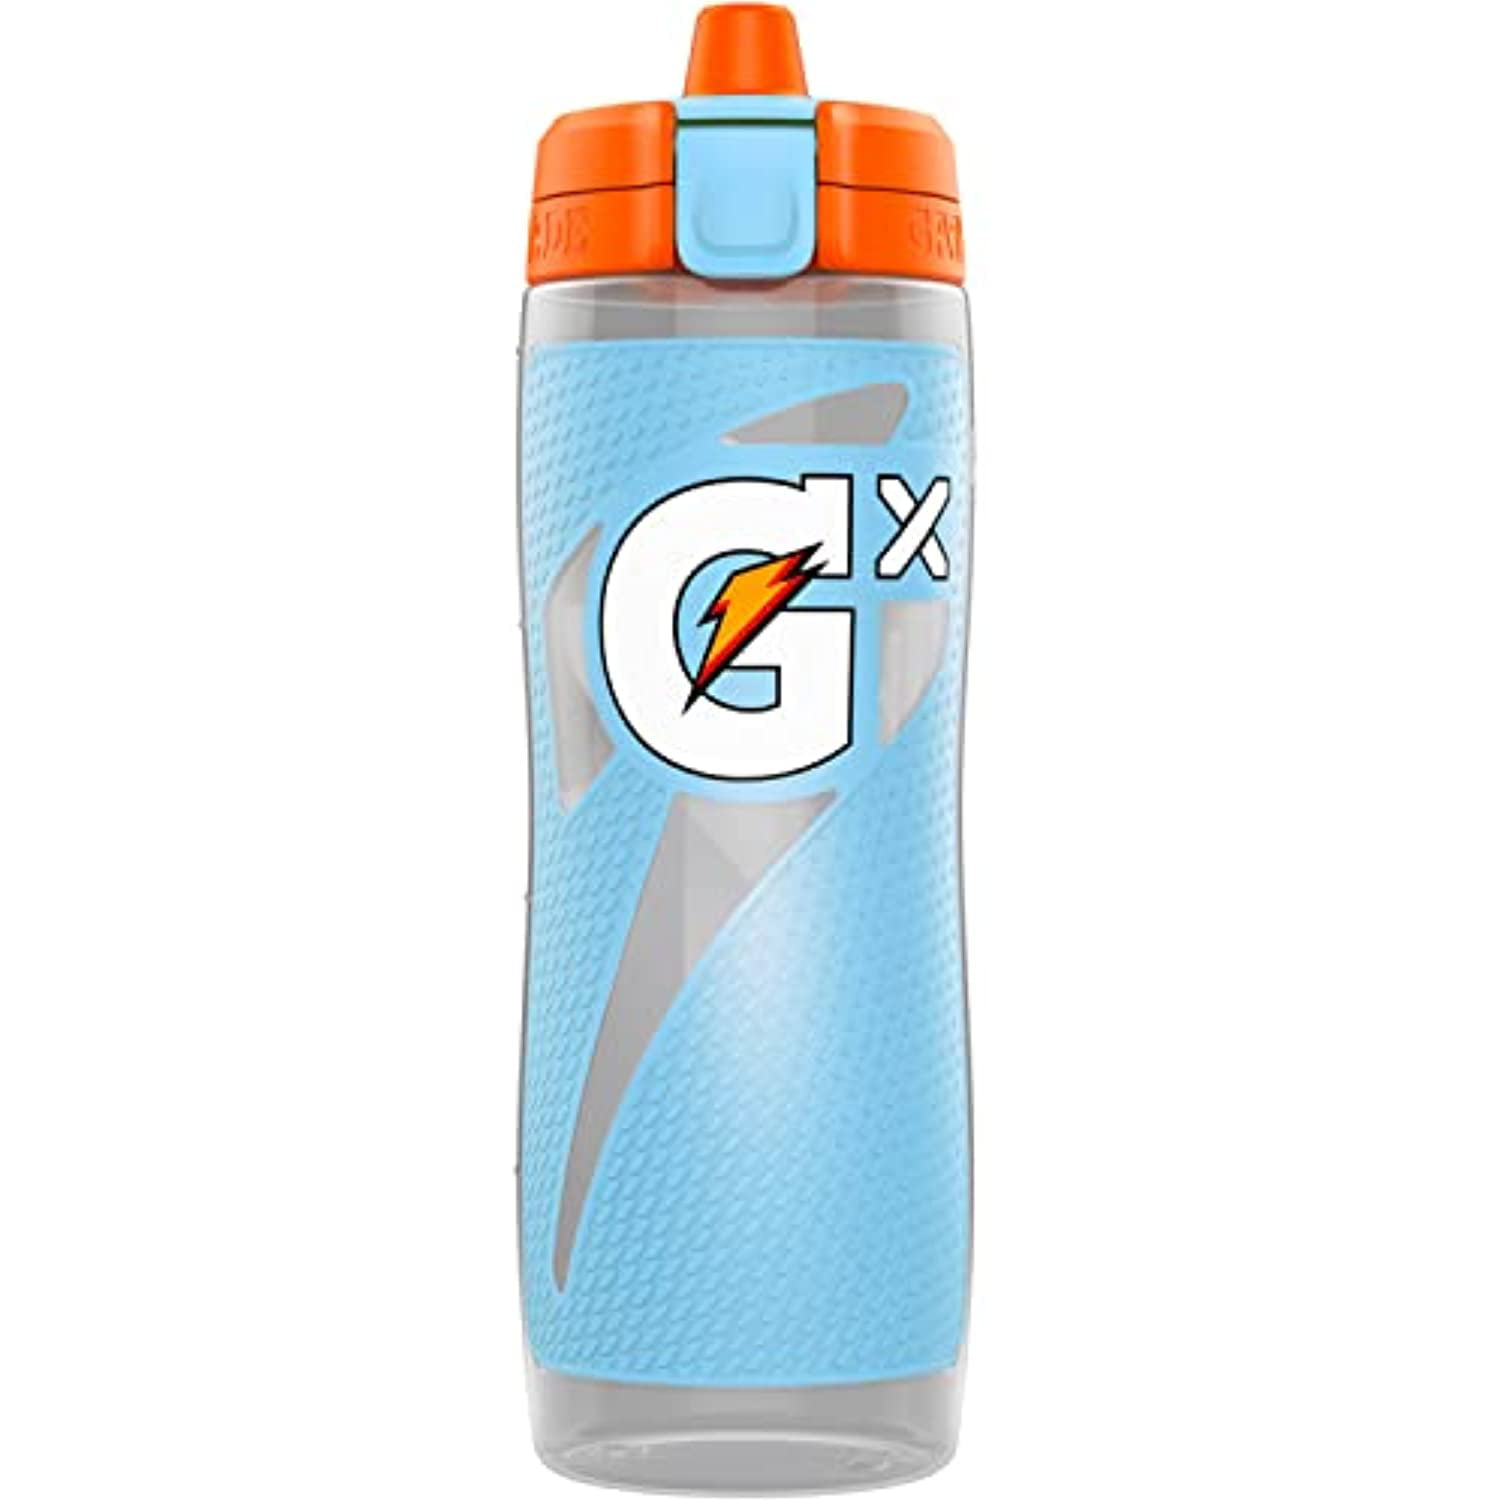 Gatorade Gx Sport Water Bottle Refillable Hydration System Gym Sports Non Slip✔️ 